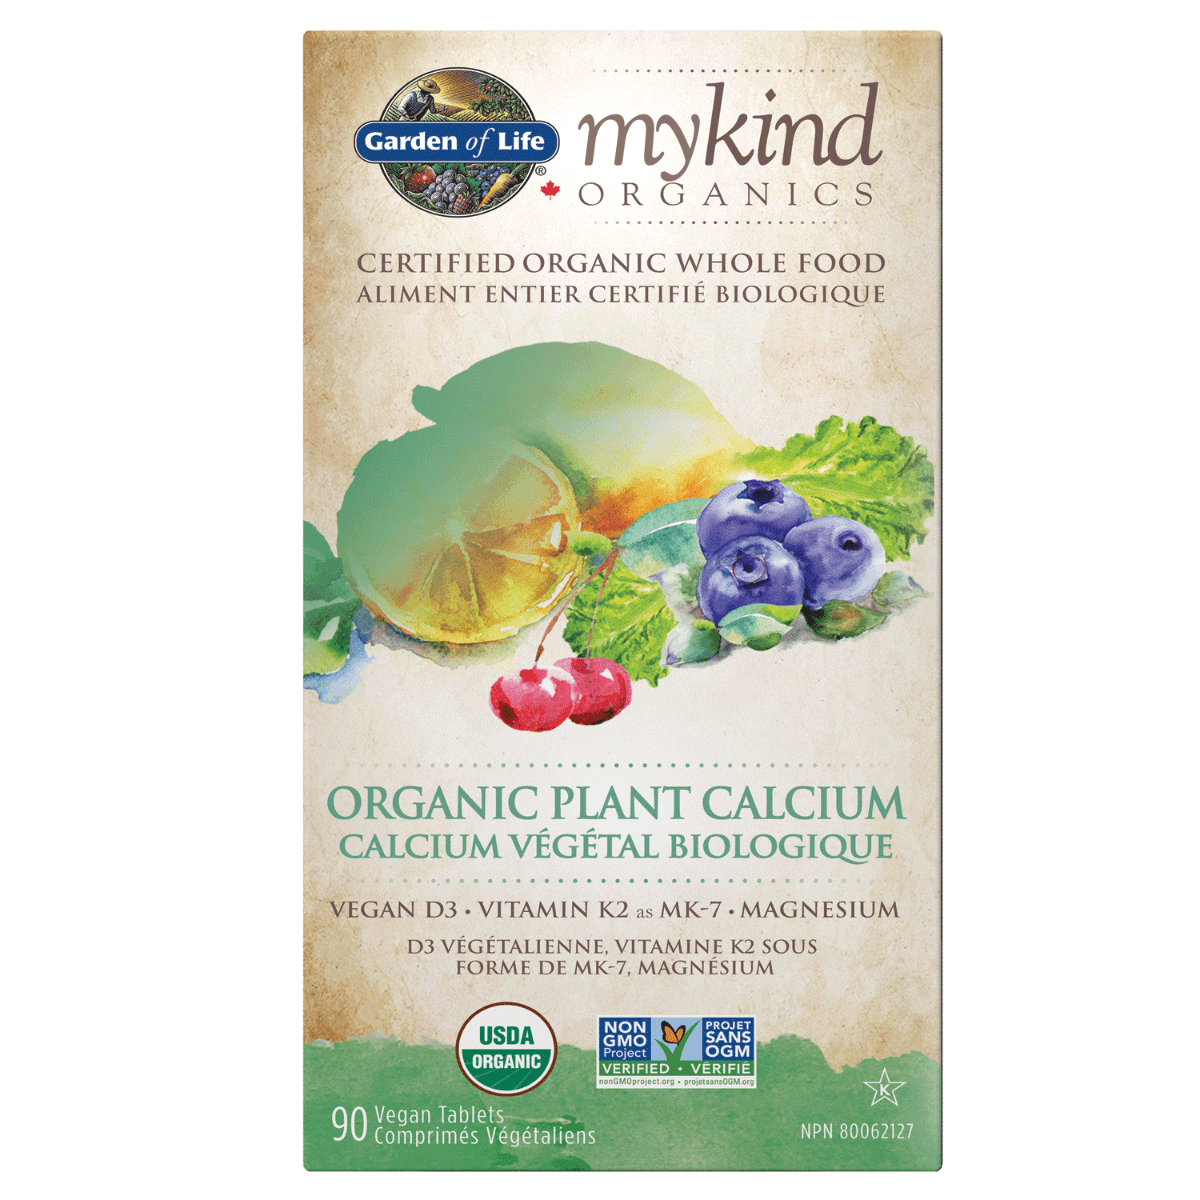 Garden of Life mykind Organics - Organic Plant Calcium - 90 Vegan Tablets